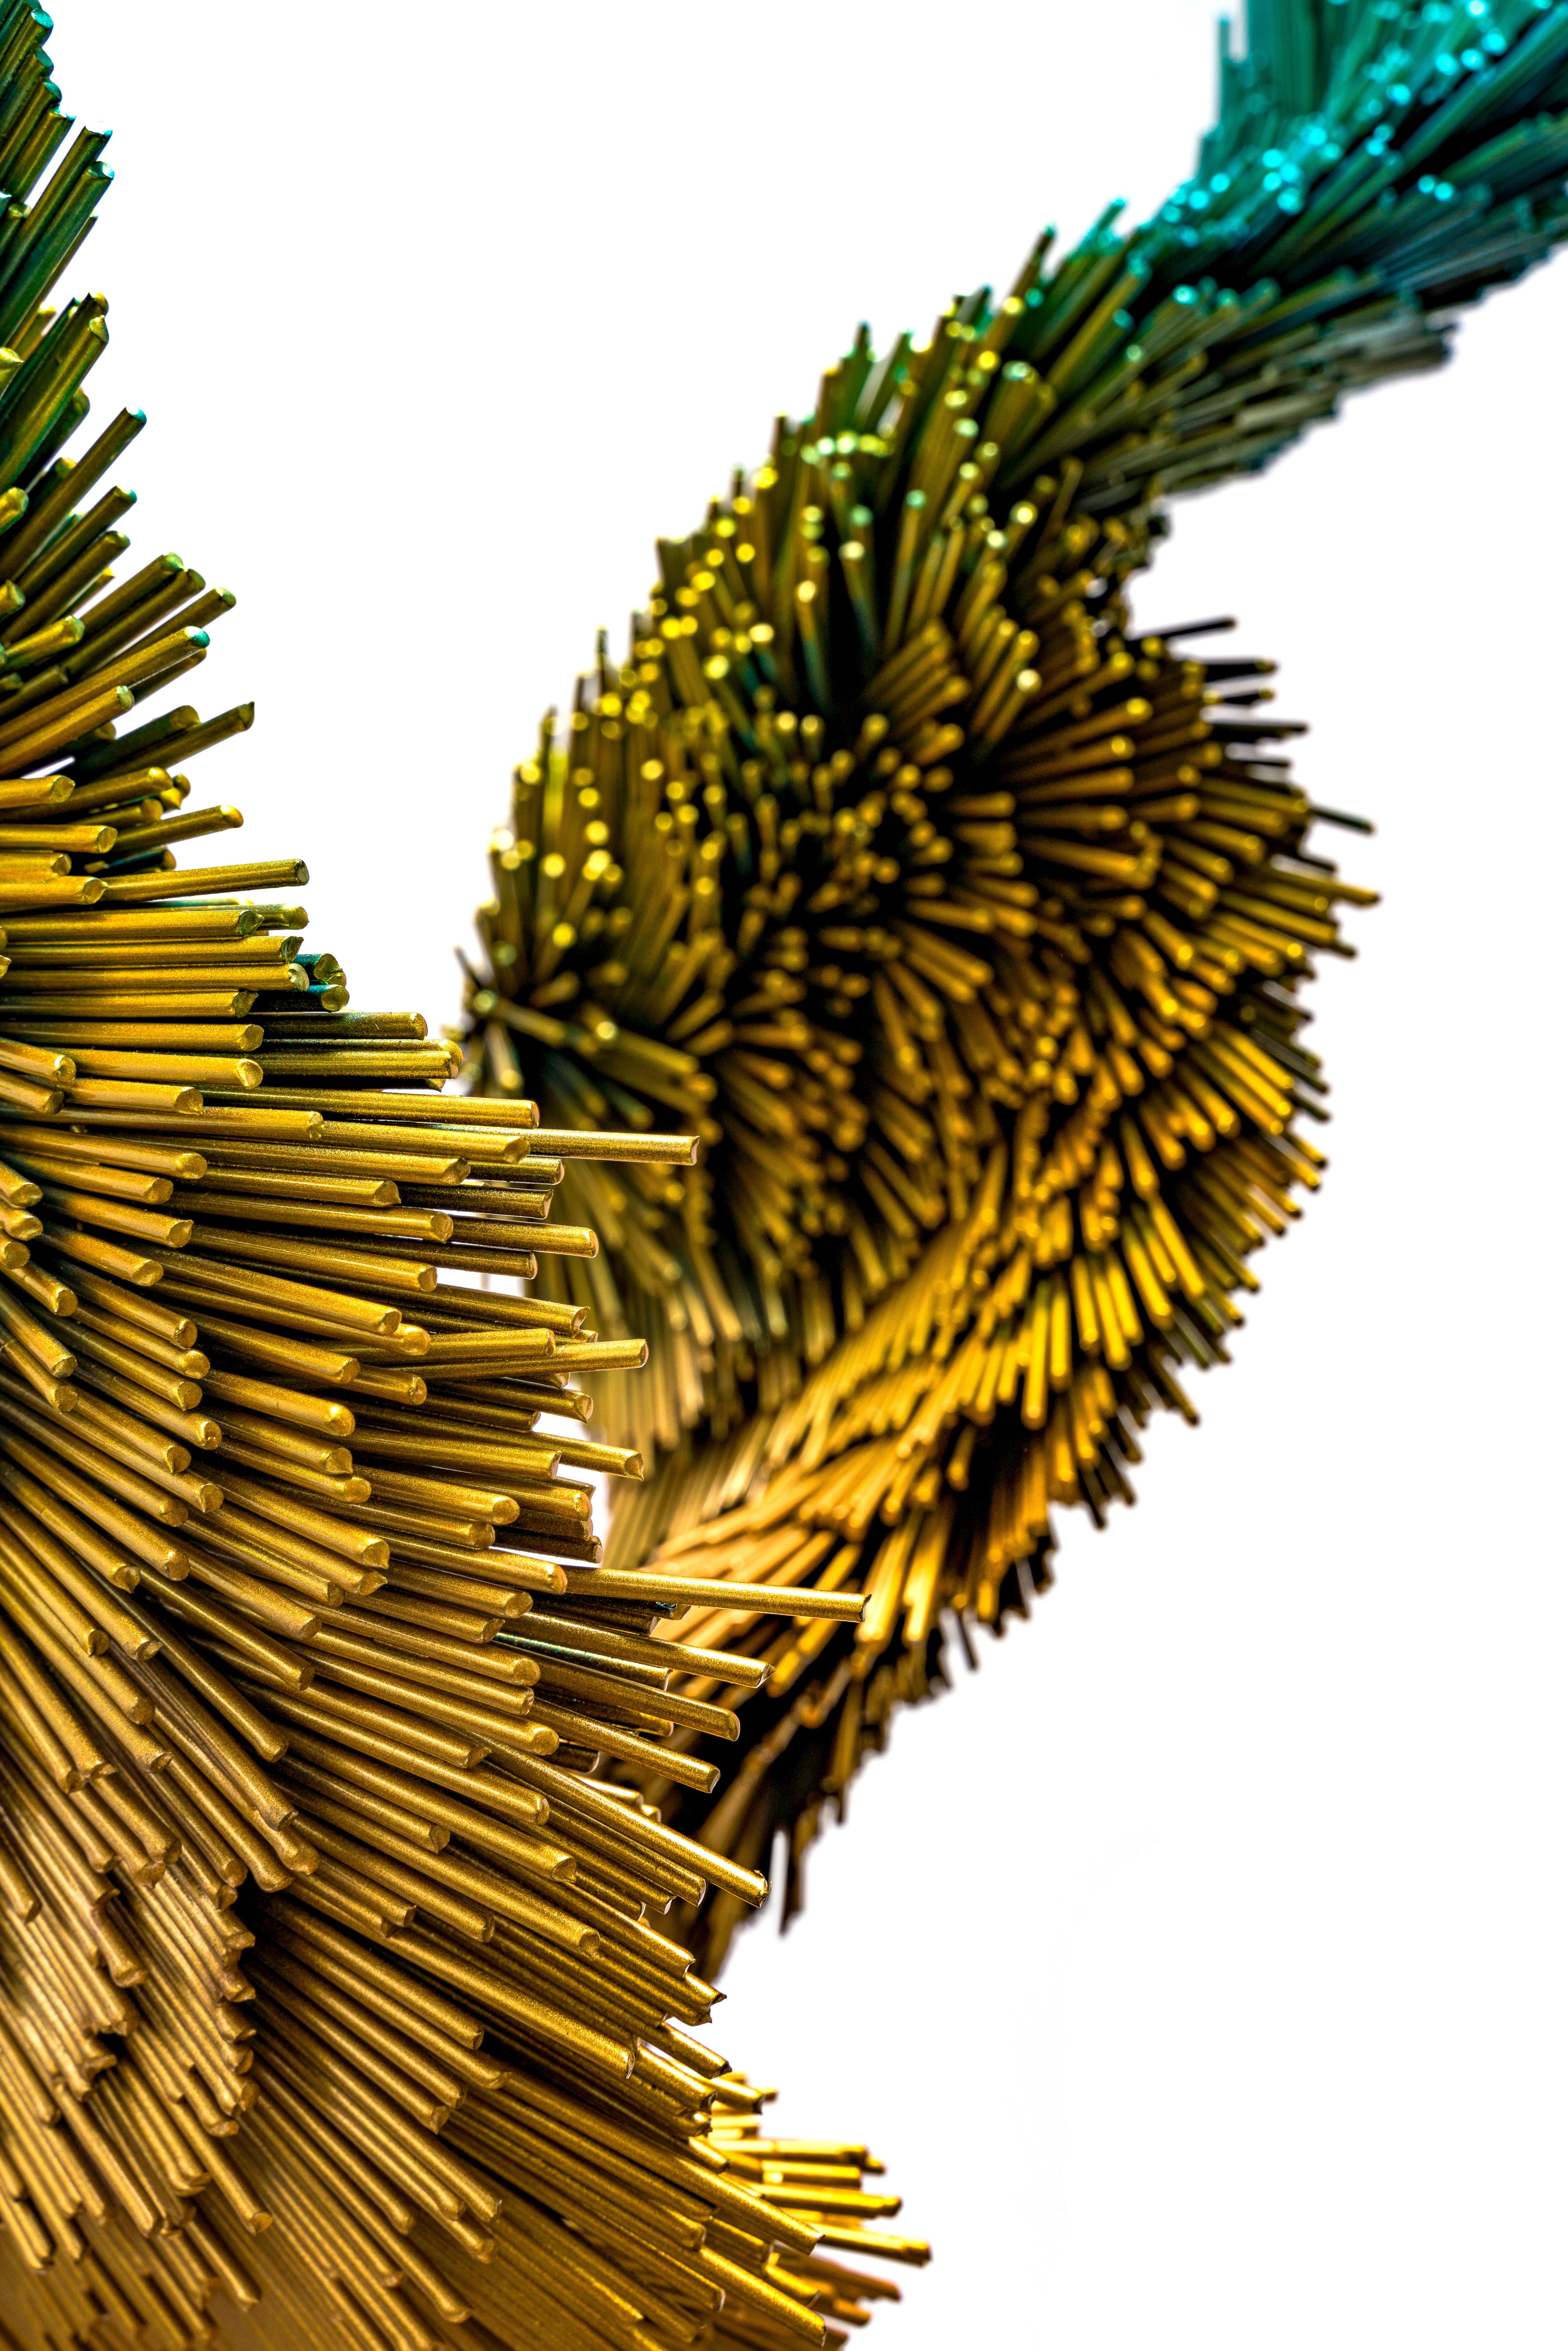 Gleaming Murmur, Steel contemporary bird sculpture in yellow and green - Contemporary Sculpture by Jake Michael Singer